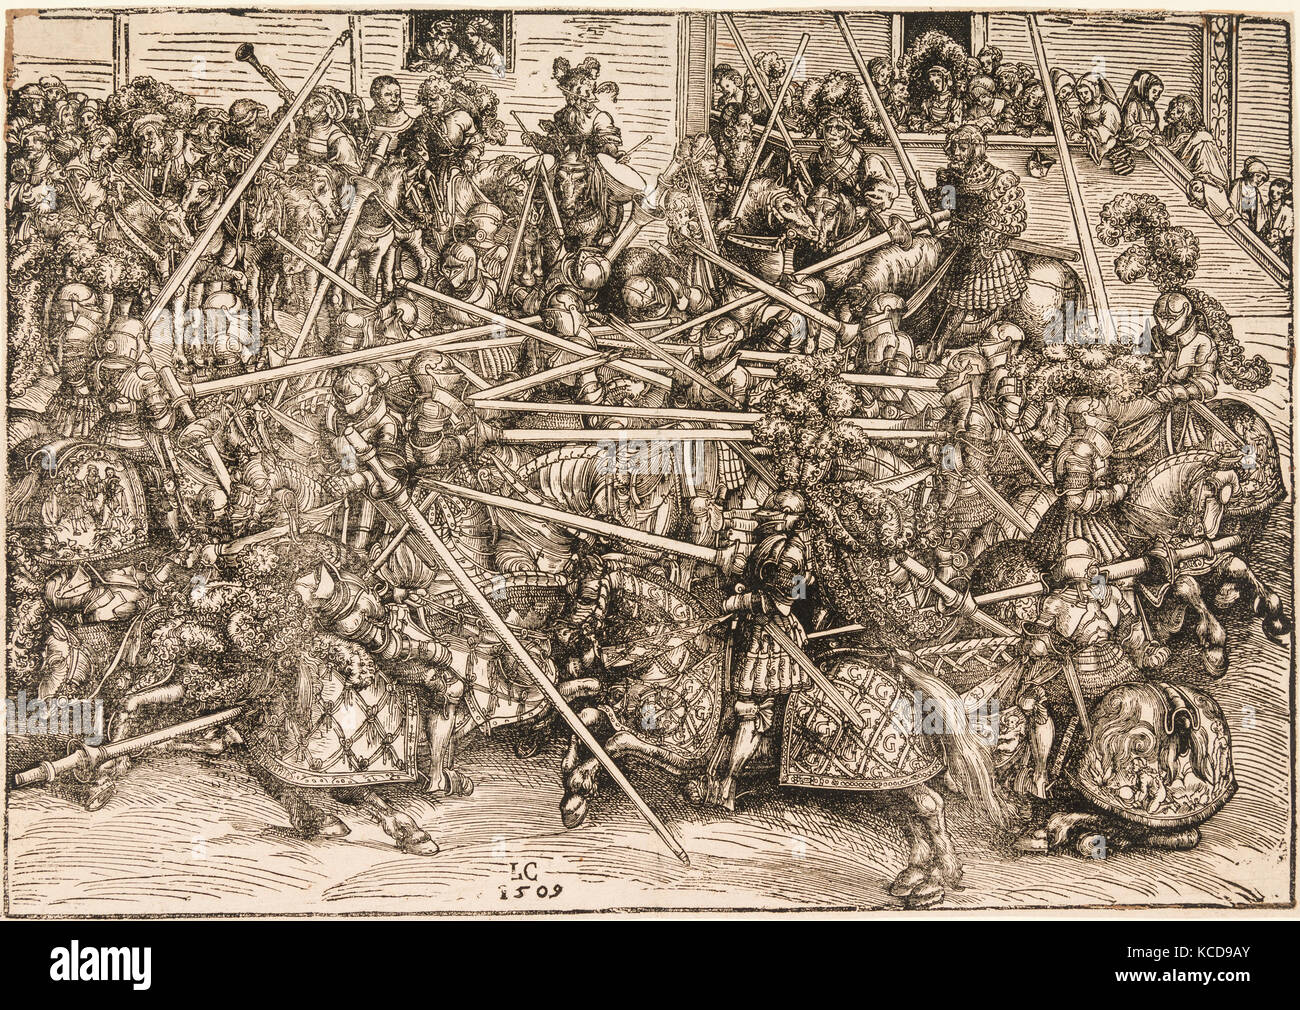 The Tournament with Lances, Lucas Cranach the Elder, dated 1509 Stock Photo